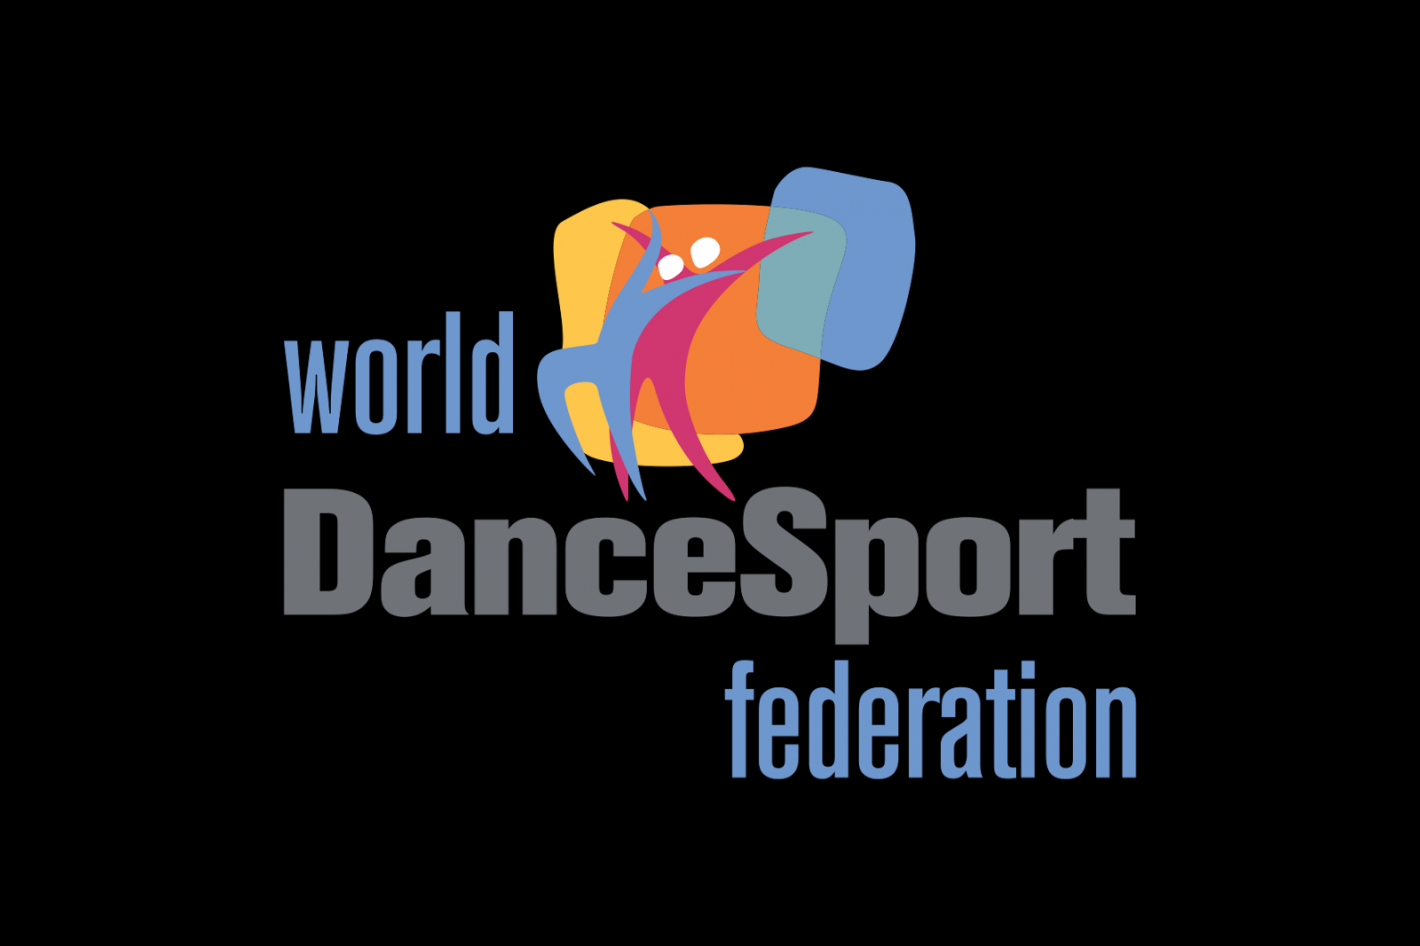 images/medium/Logo_World_DanceSport_Federation_1.png